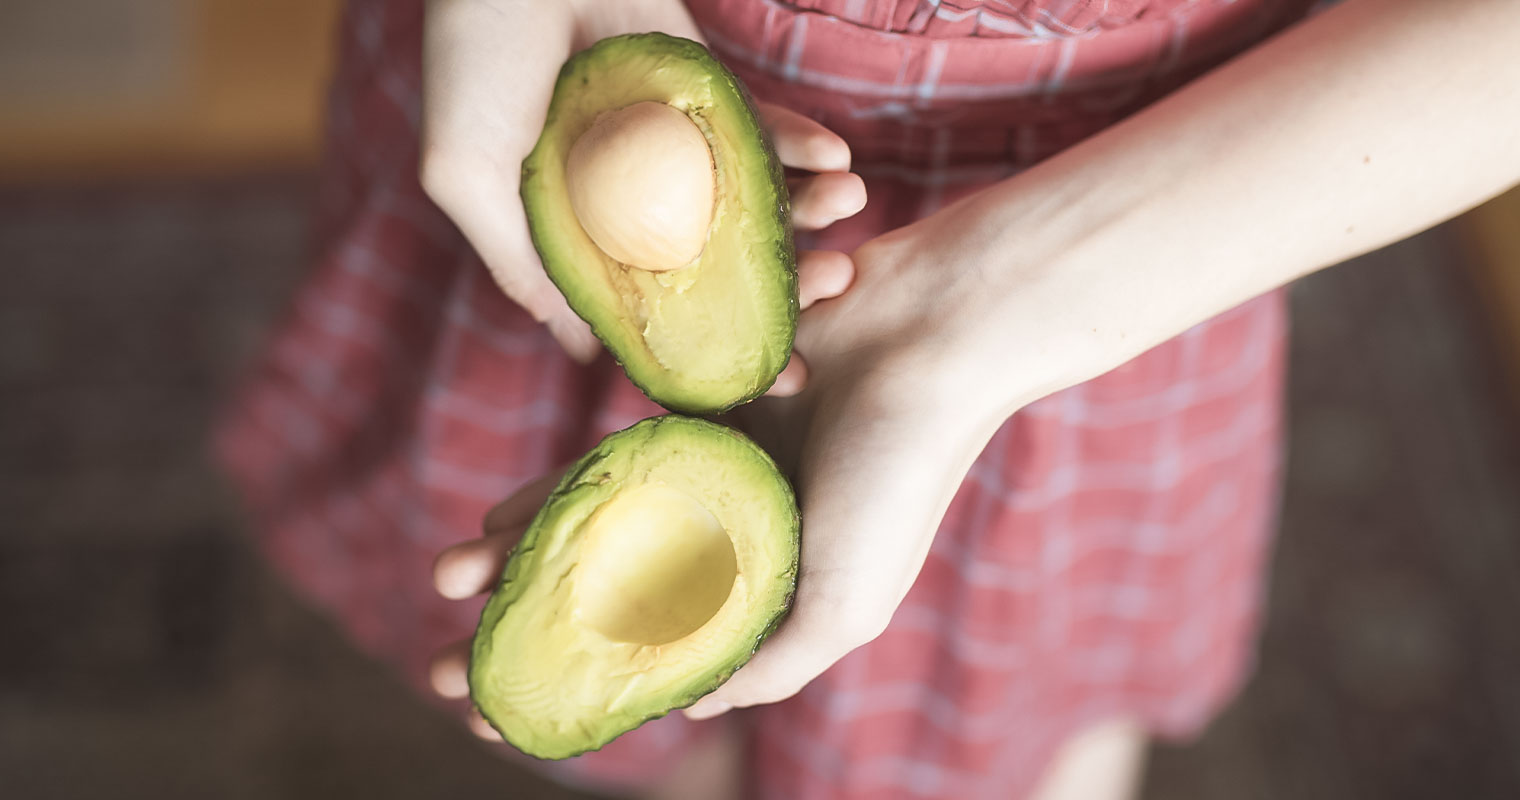 Girl holding an avocado cut into half showing the avocado seed